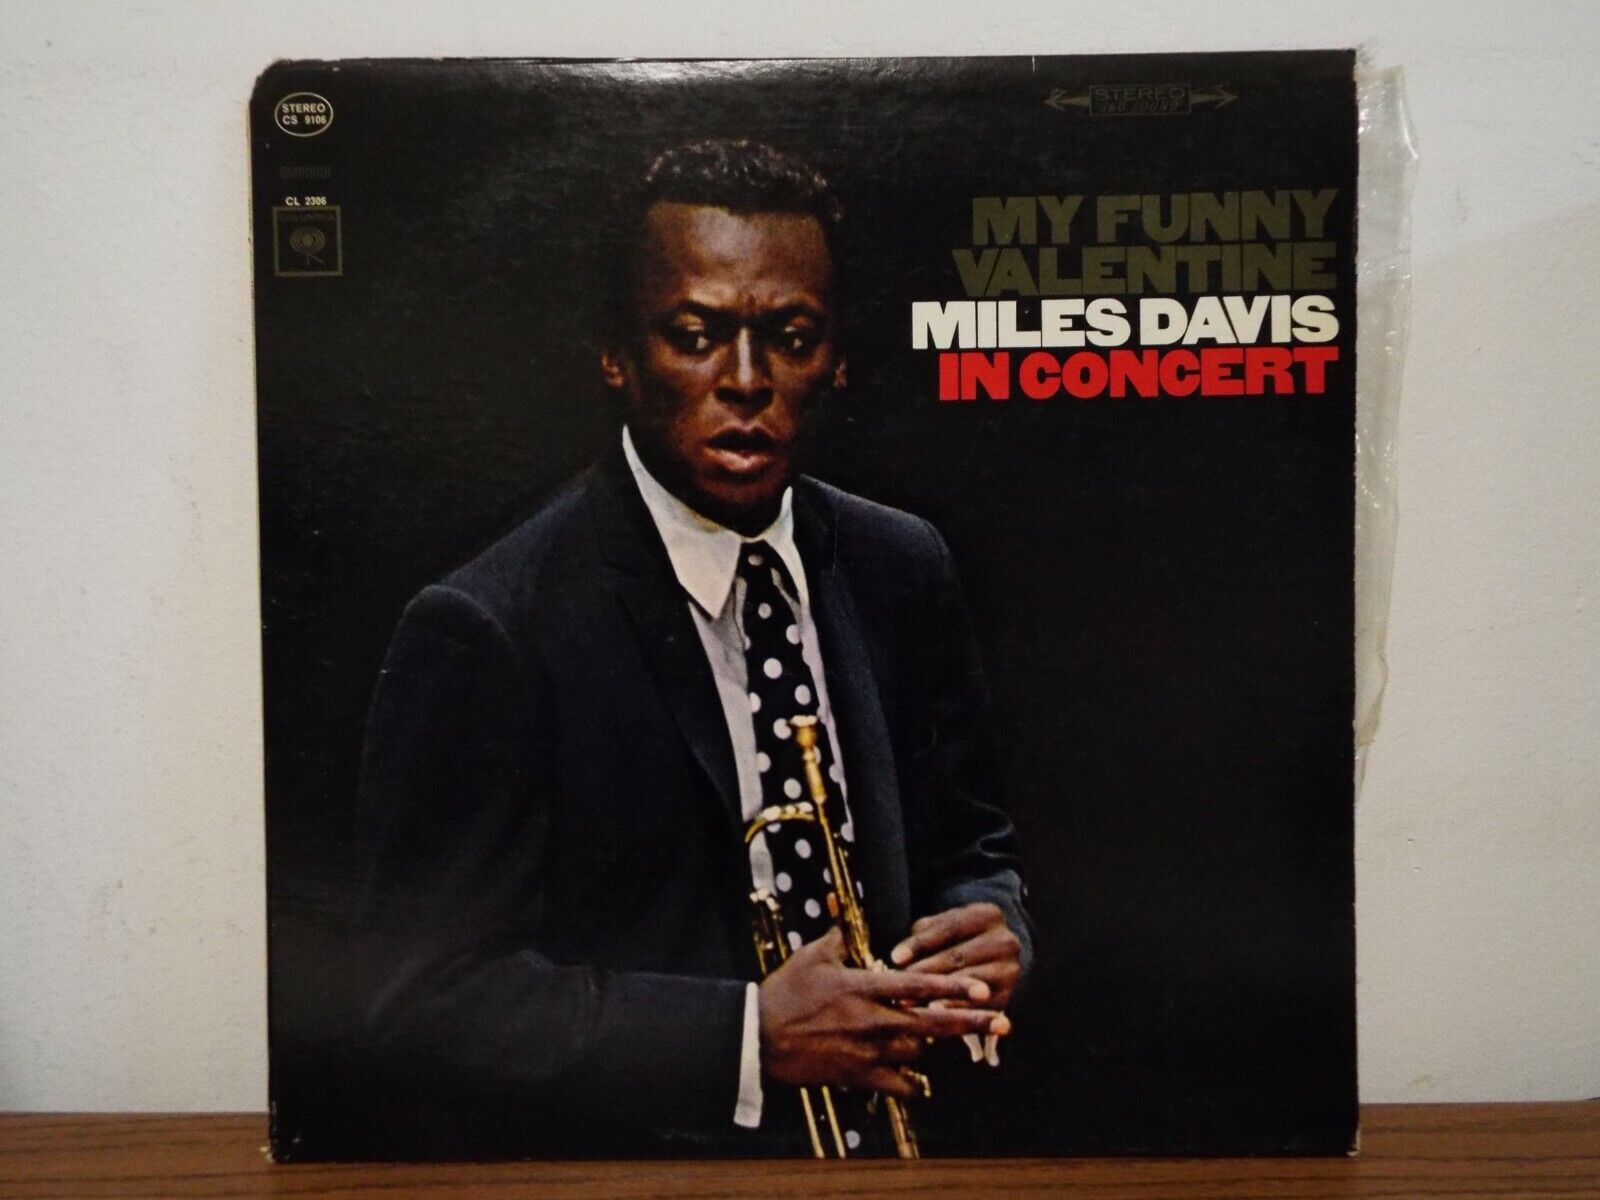 MILES DAVIS IN CONCERT MY FUNNY VALENTINE 1965 JAZZ LP VINYL ALBUM | eBay